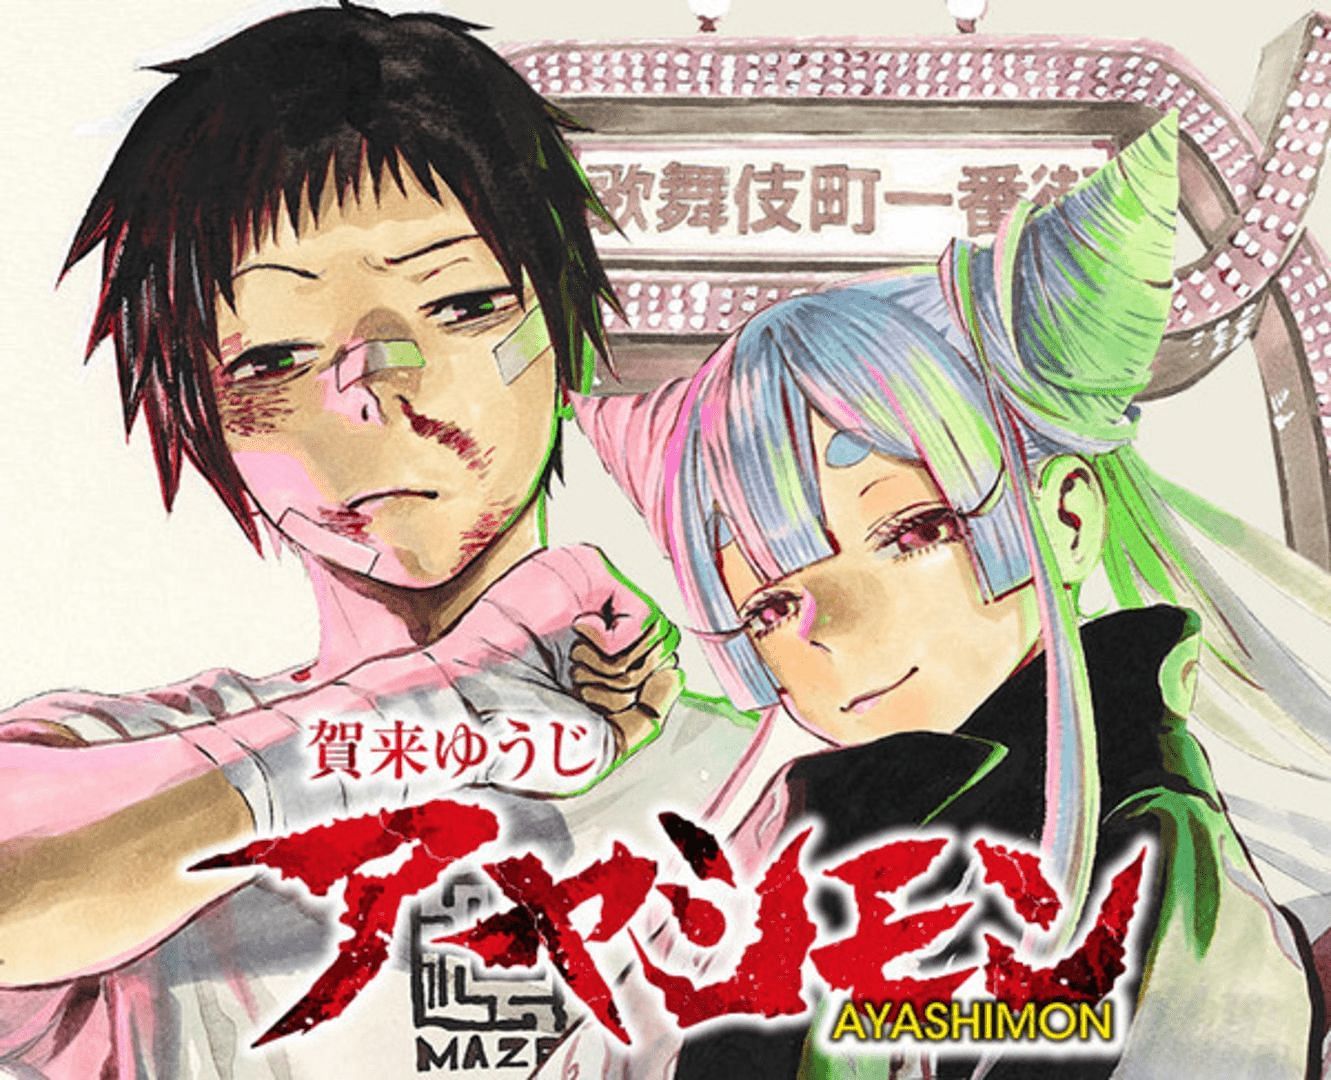 Weekly Shonen Jump manga - Ayashimon (Image via Shonen Jump)